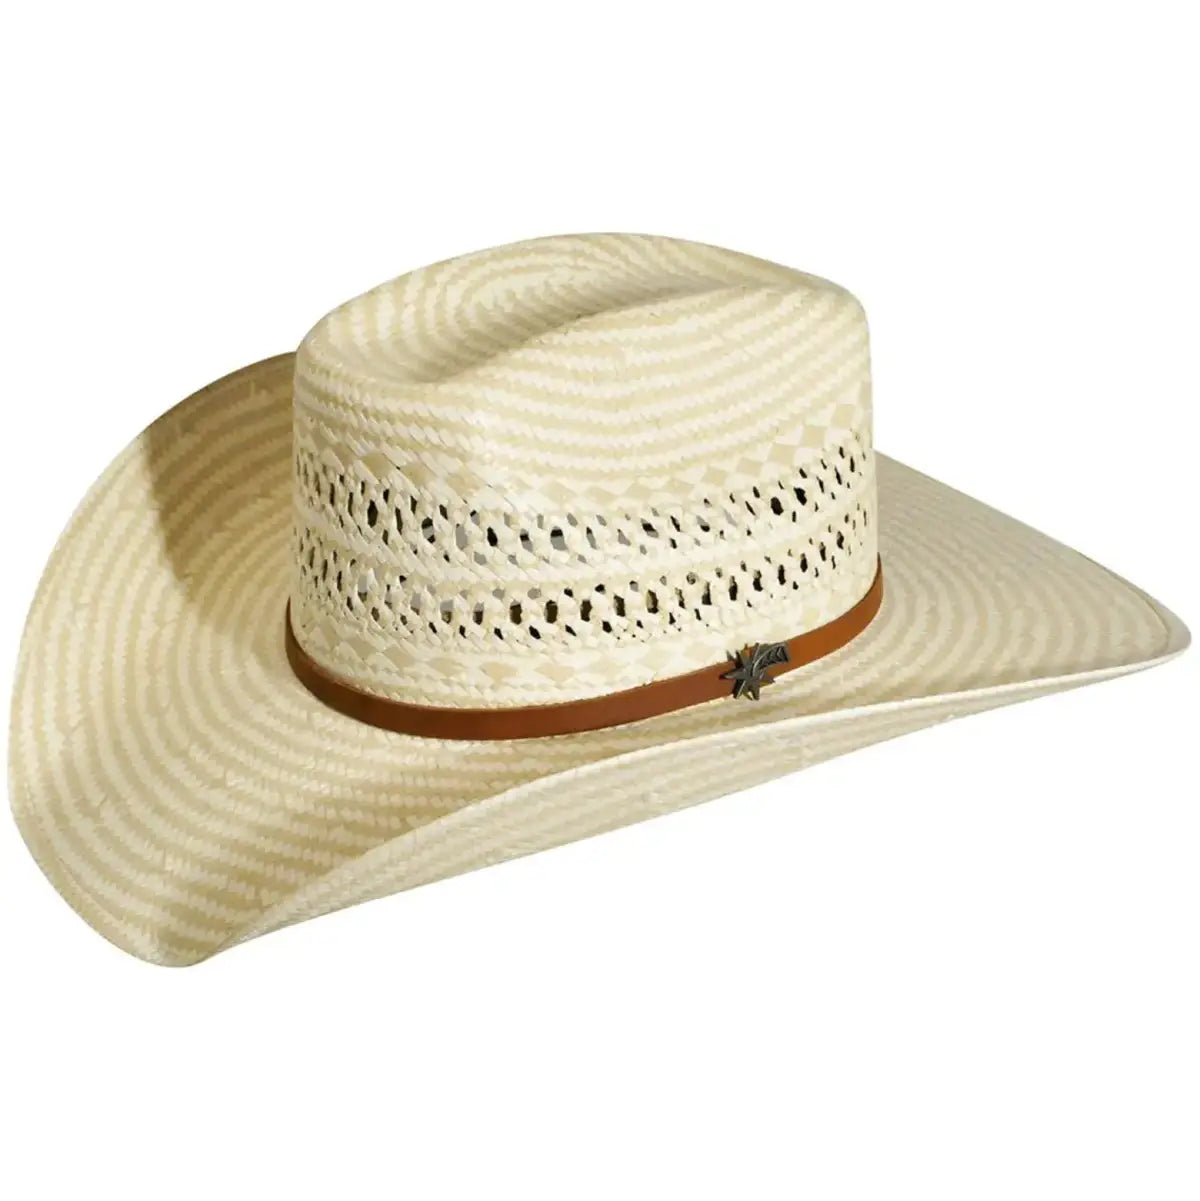 Bailey Cowboy Hats 4X Straw Fields Brick Crown Long Oval S1504B - Bailey Hats